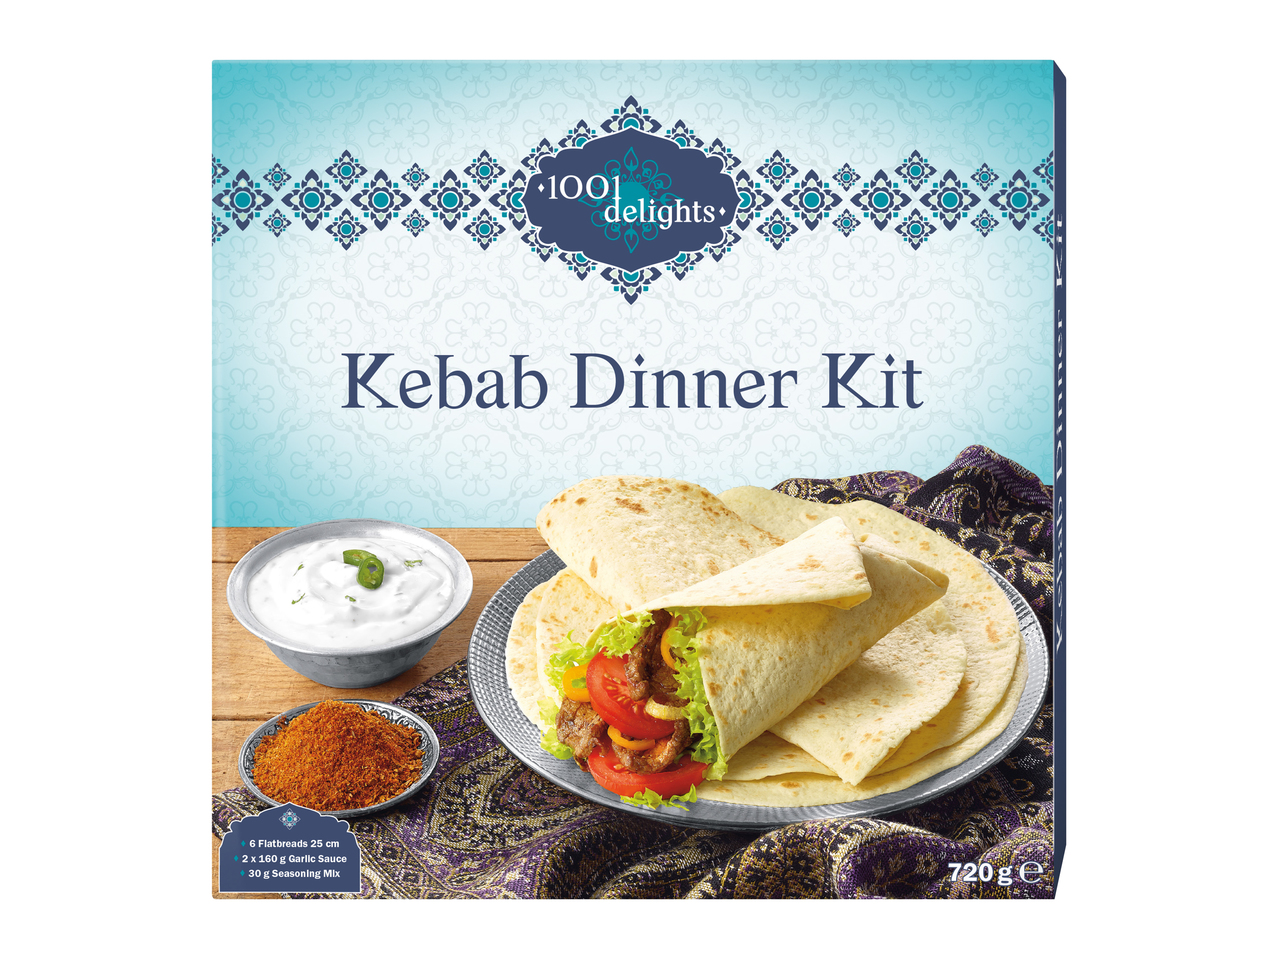 Kebab dinner kit